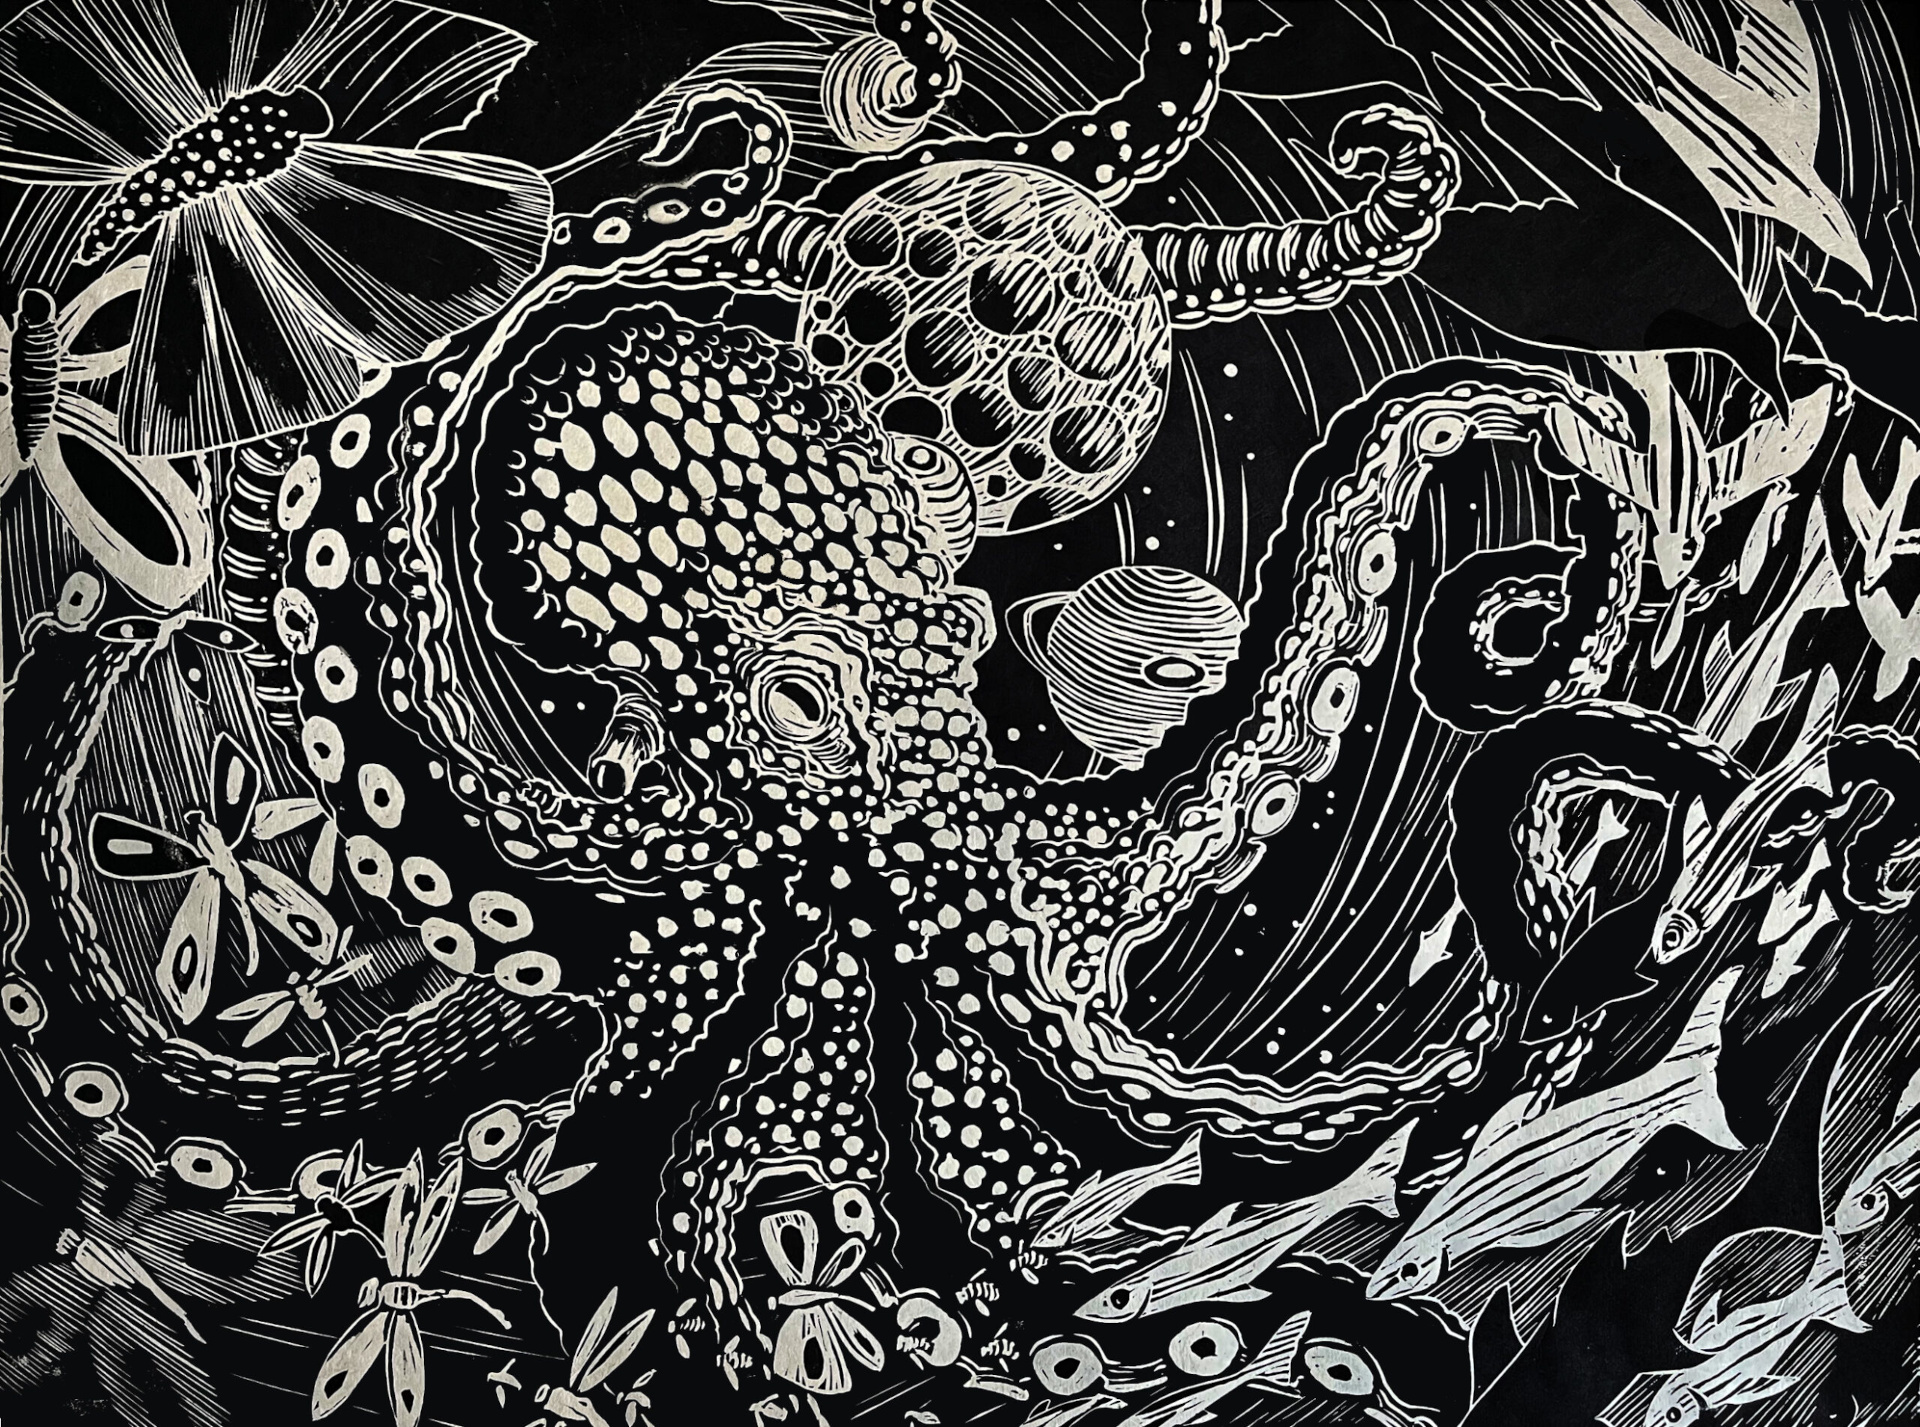 Woodcut: Octopus Dreaming